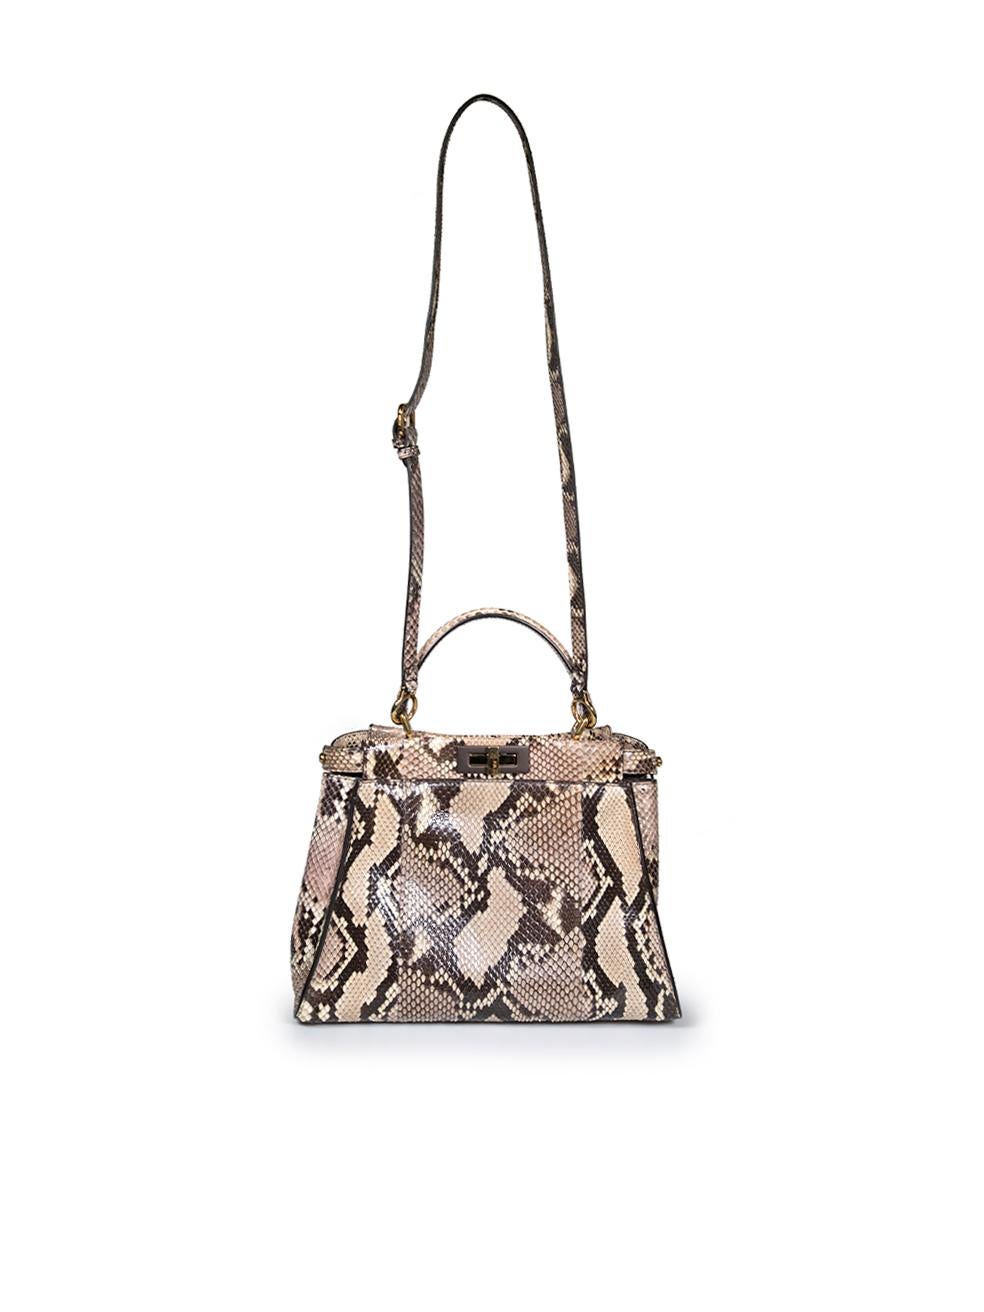 Fendi Brown Snakeskin Peekaboo ISeeU Top-Handle Bag In Good Condition For Sale In London, GB